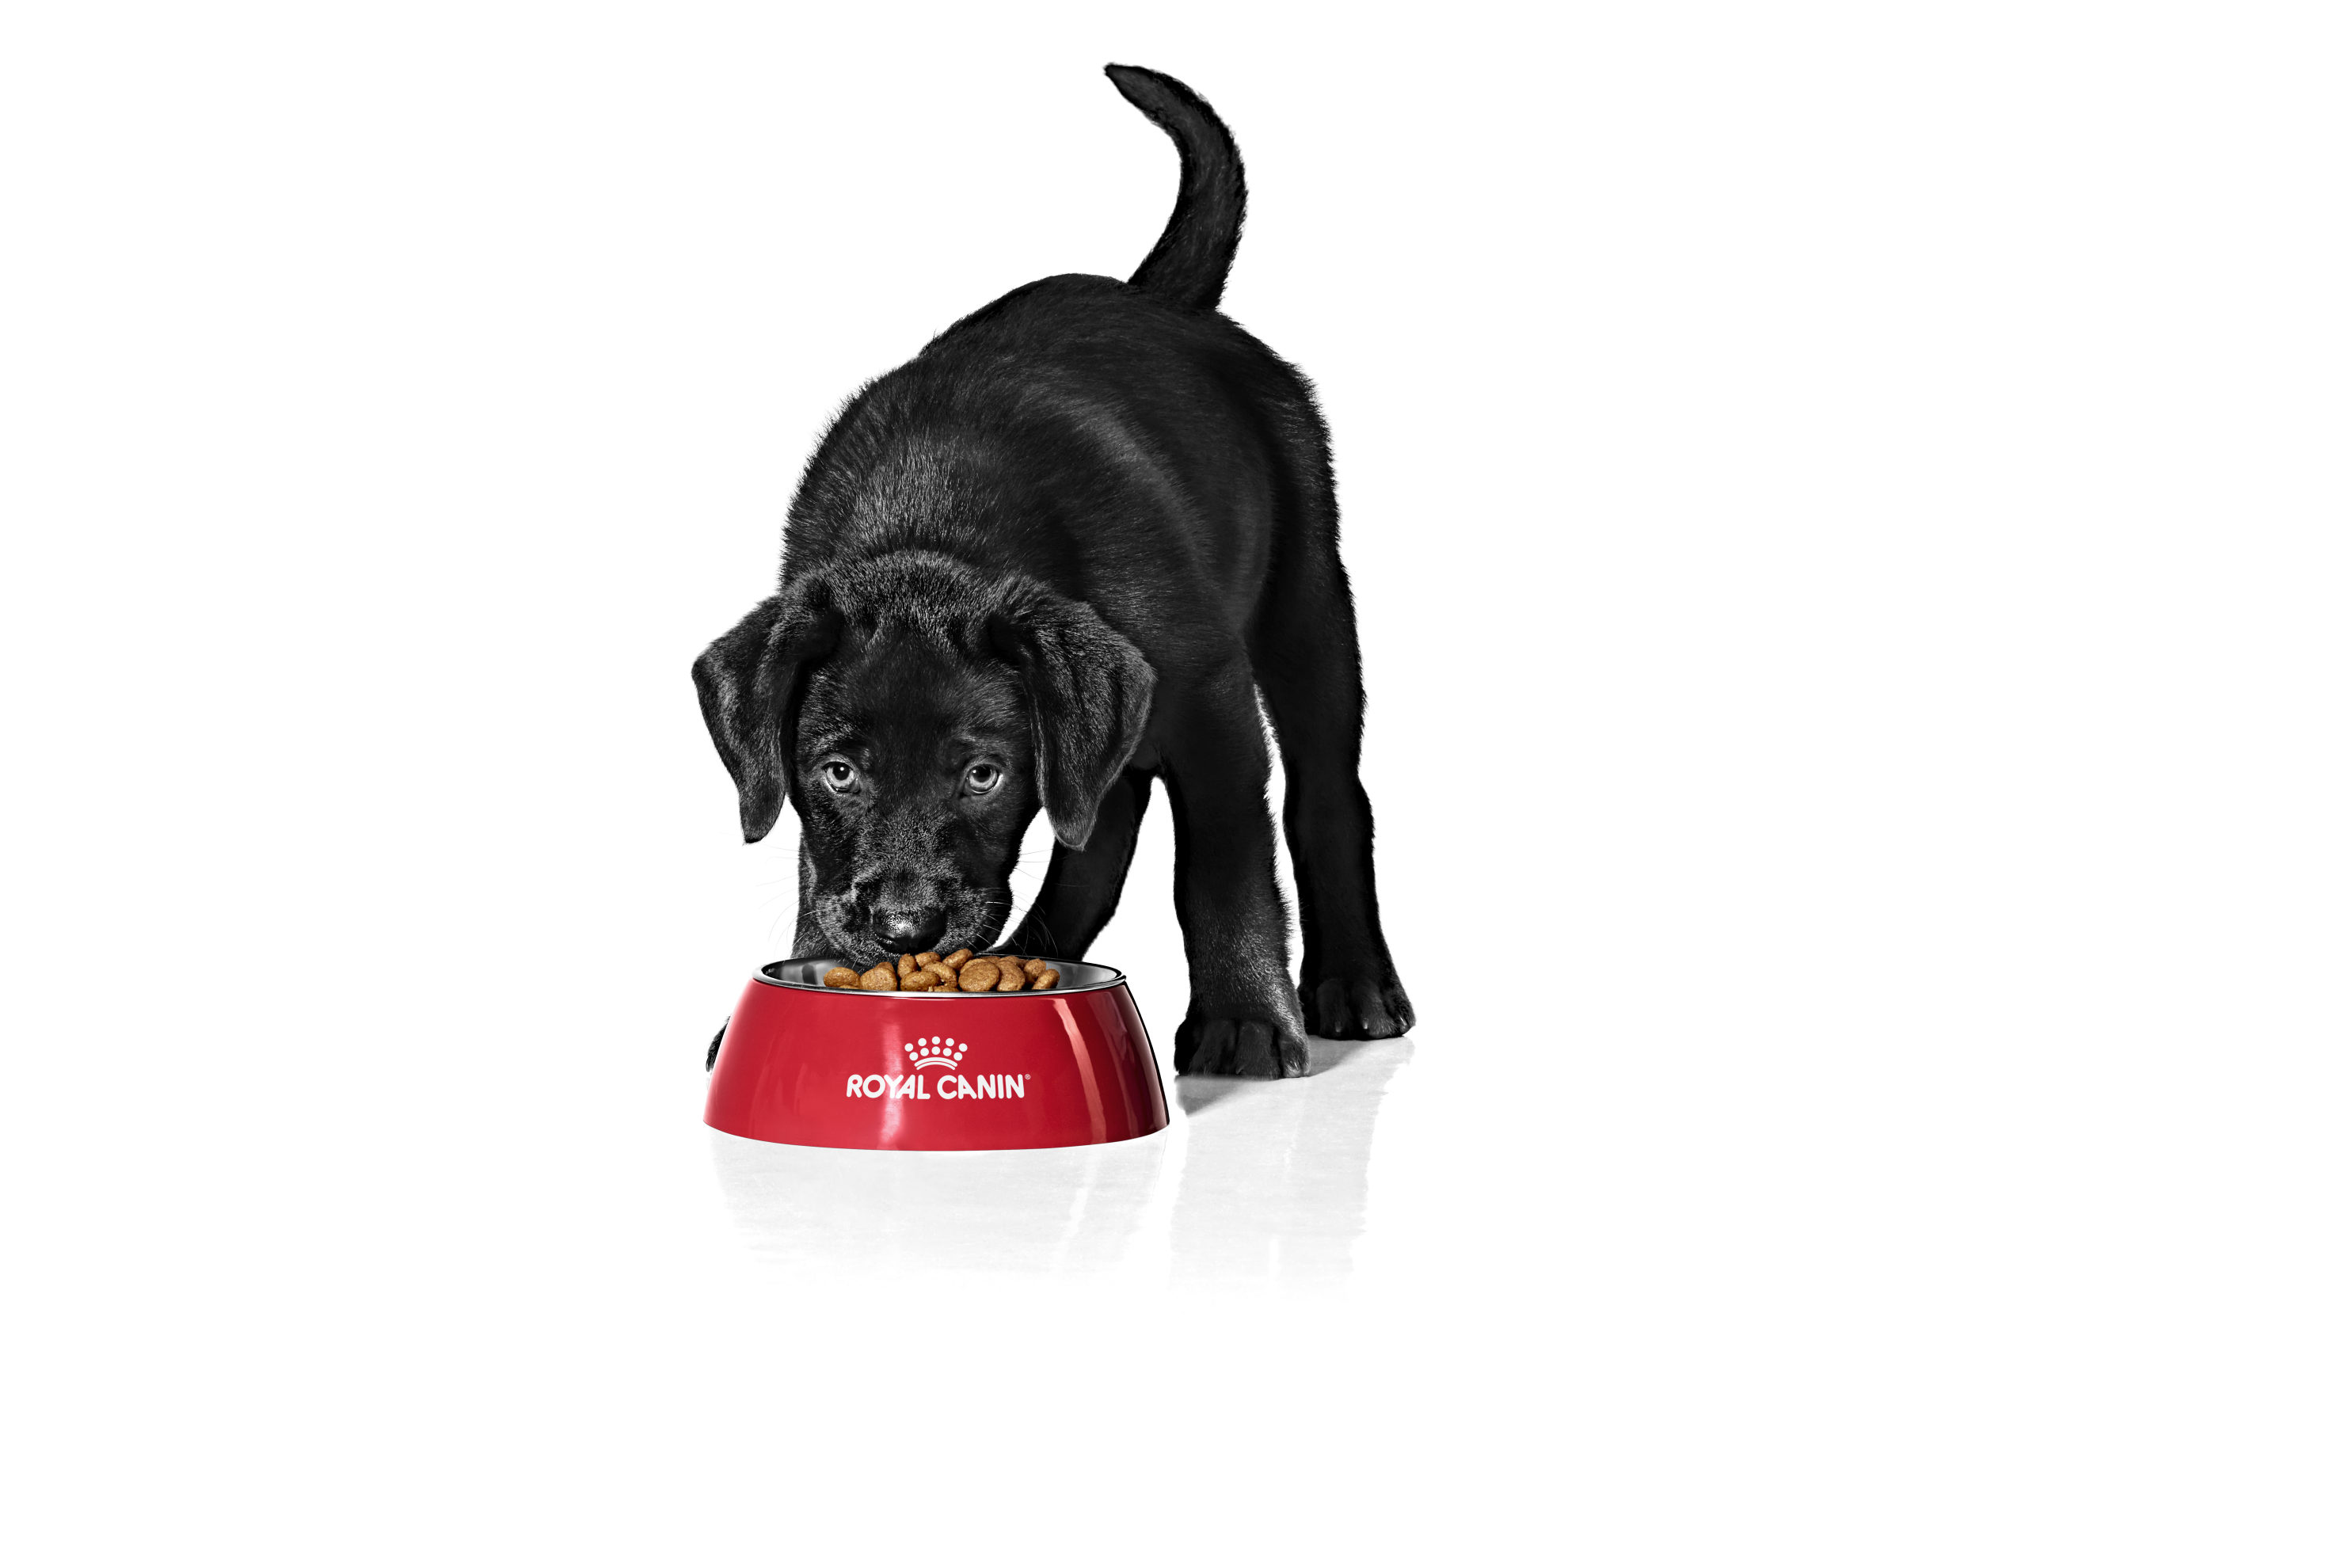 Black Labrador Retriever puppy eating from a red bowl